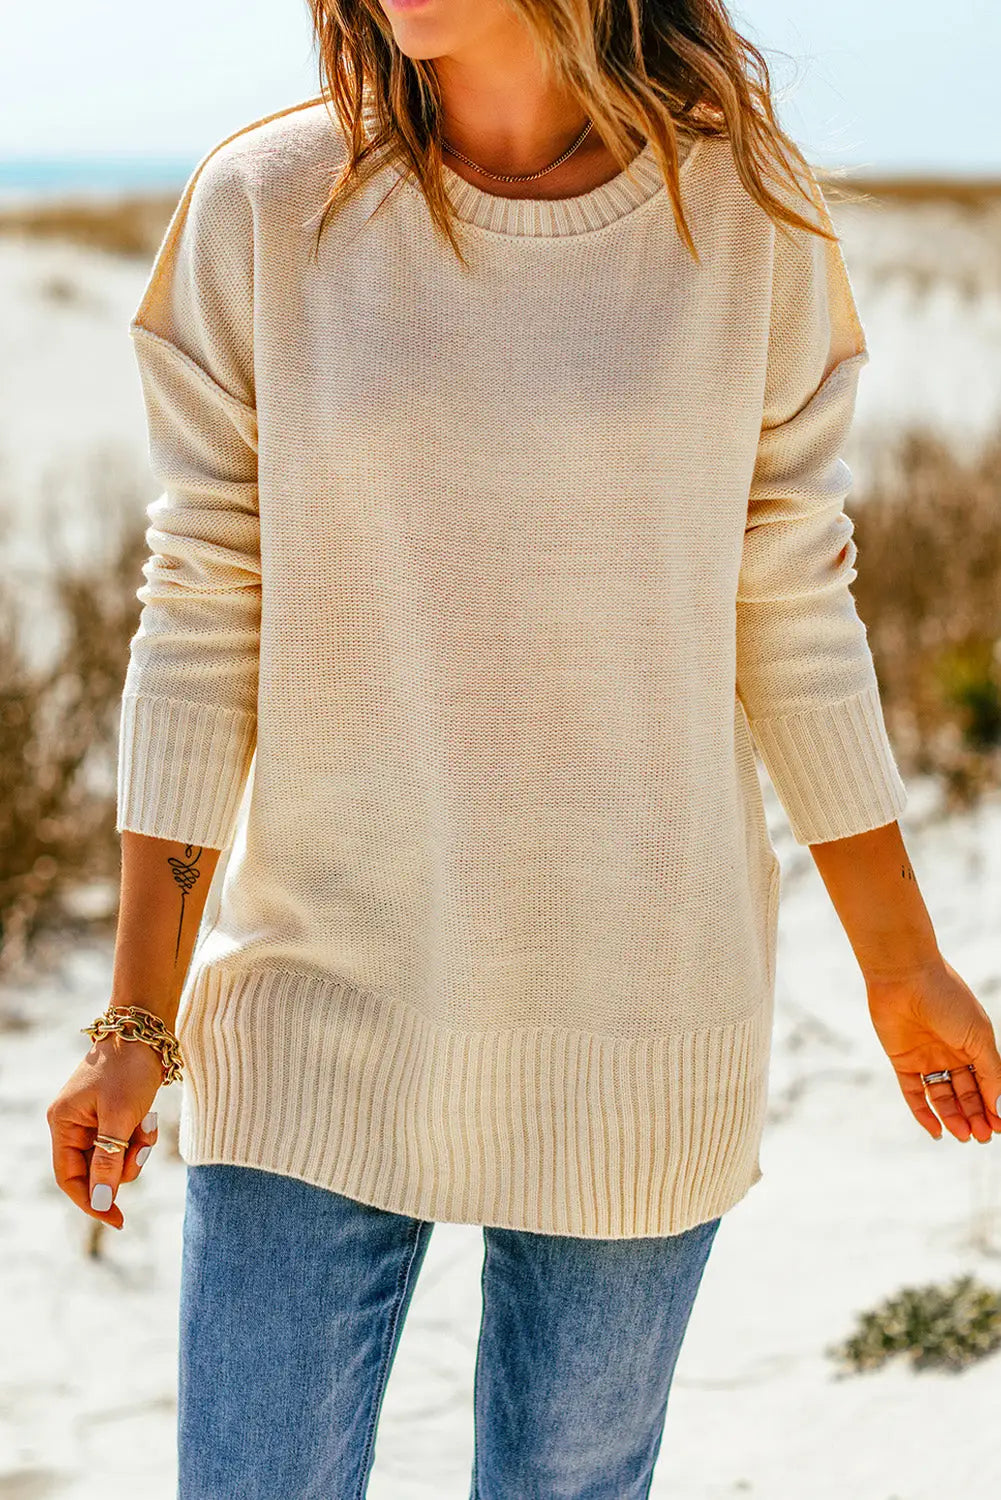 Apricot side split tunic sweater - tops